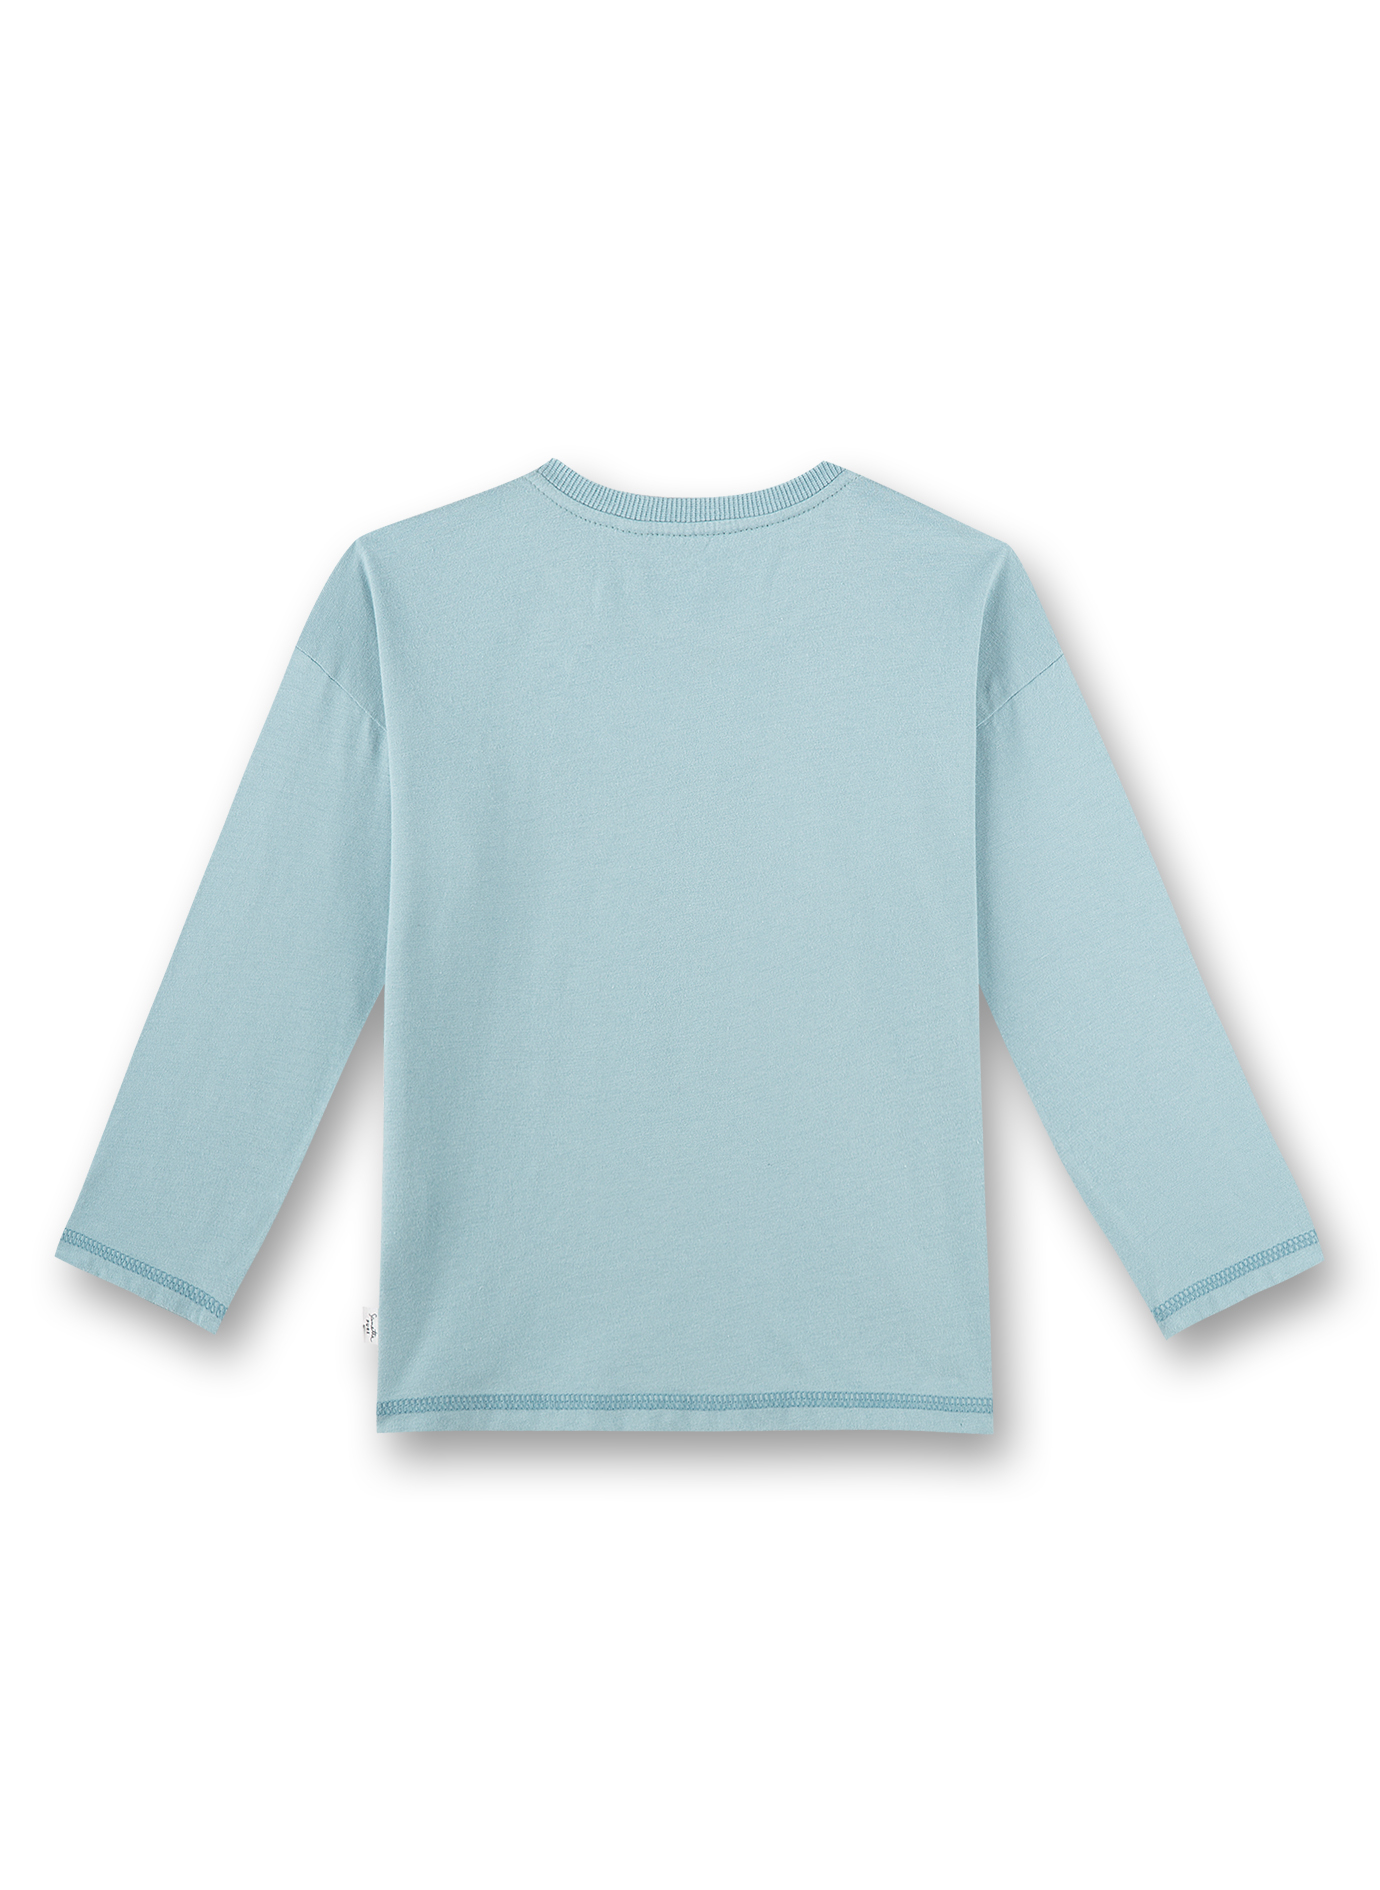 Jungen-Shirt langarm Hellblau